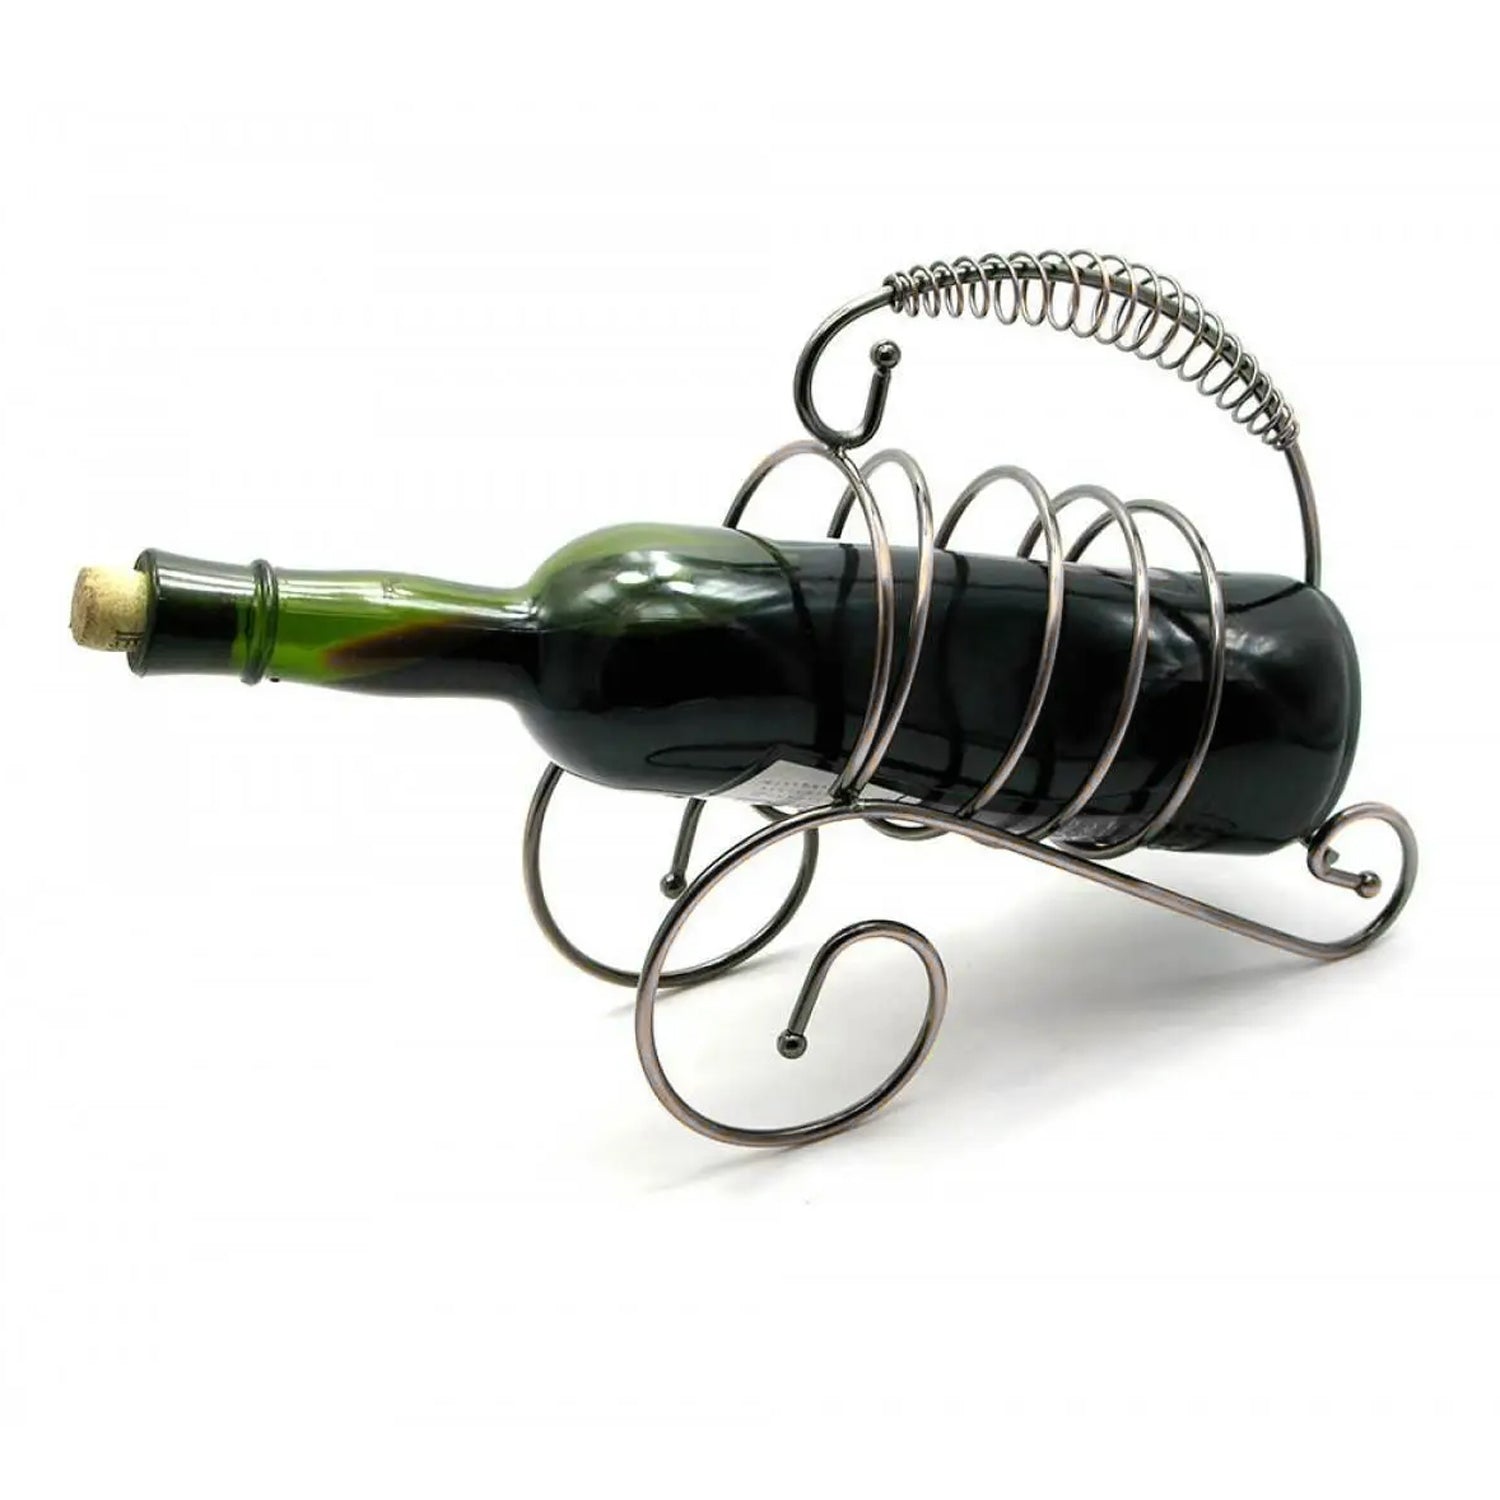 5112 Metal Wedding Party Spring Decor Wine Bottle Rack Standing Holder Copper Tone (stainless Steel) DeoDap